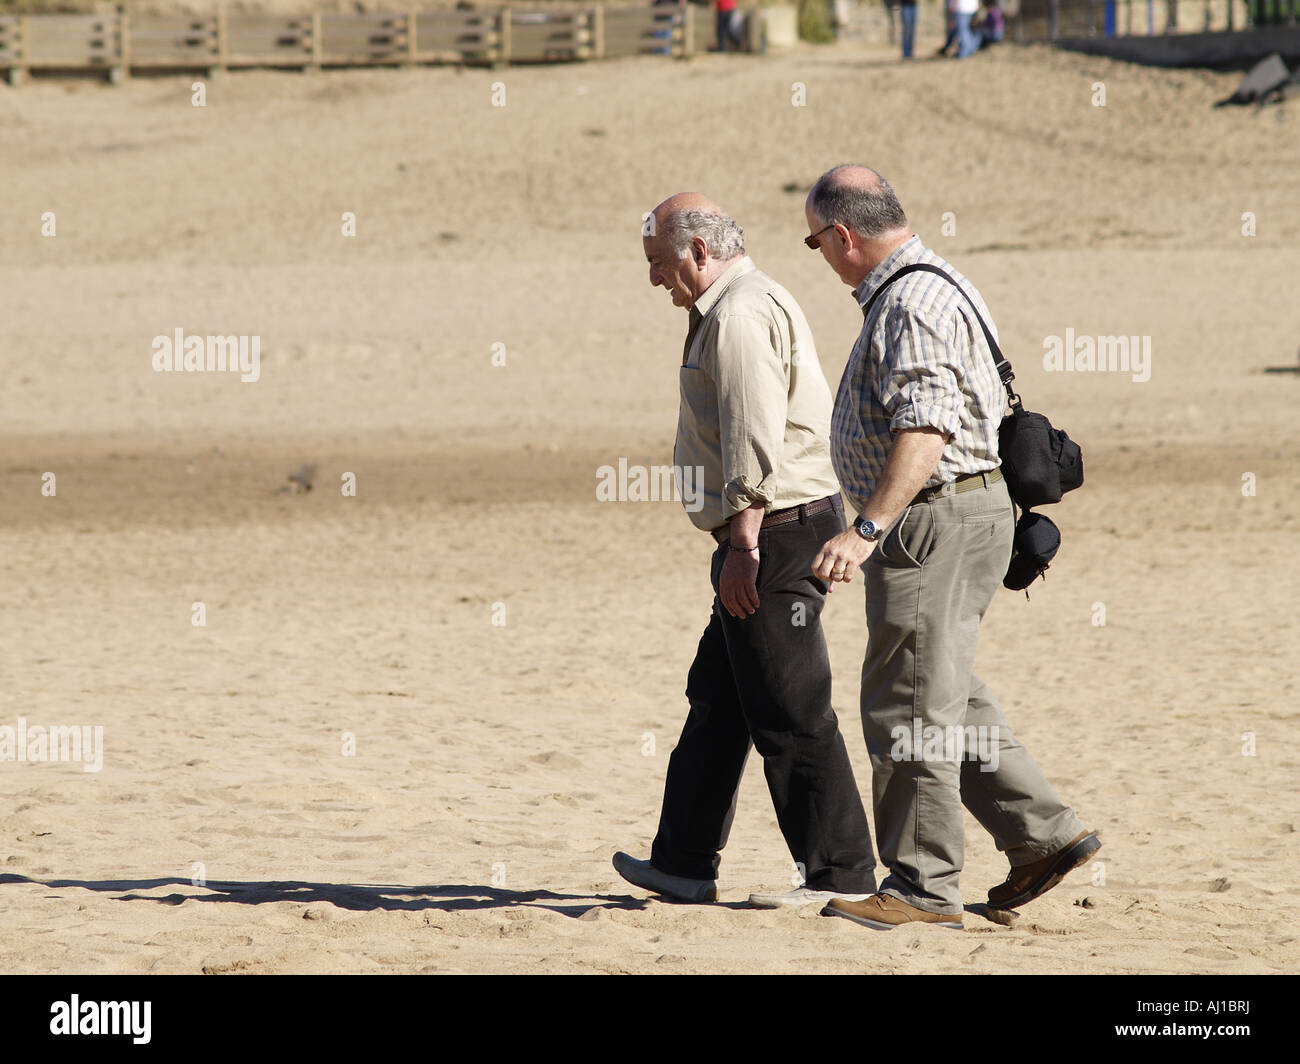 Two old men walking on a sandy beach Stock Photo